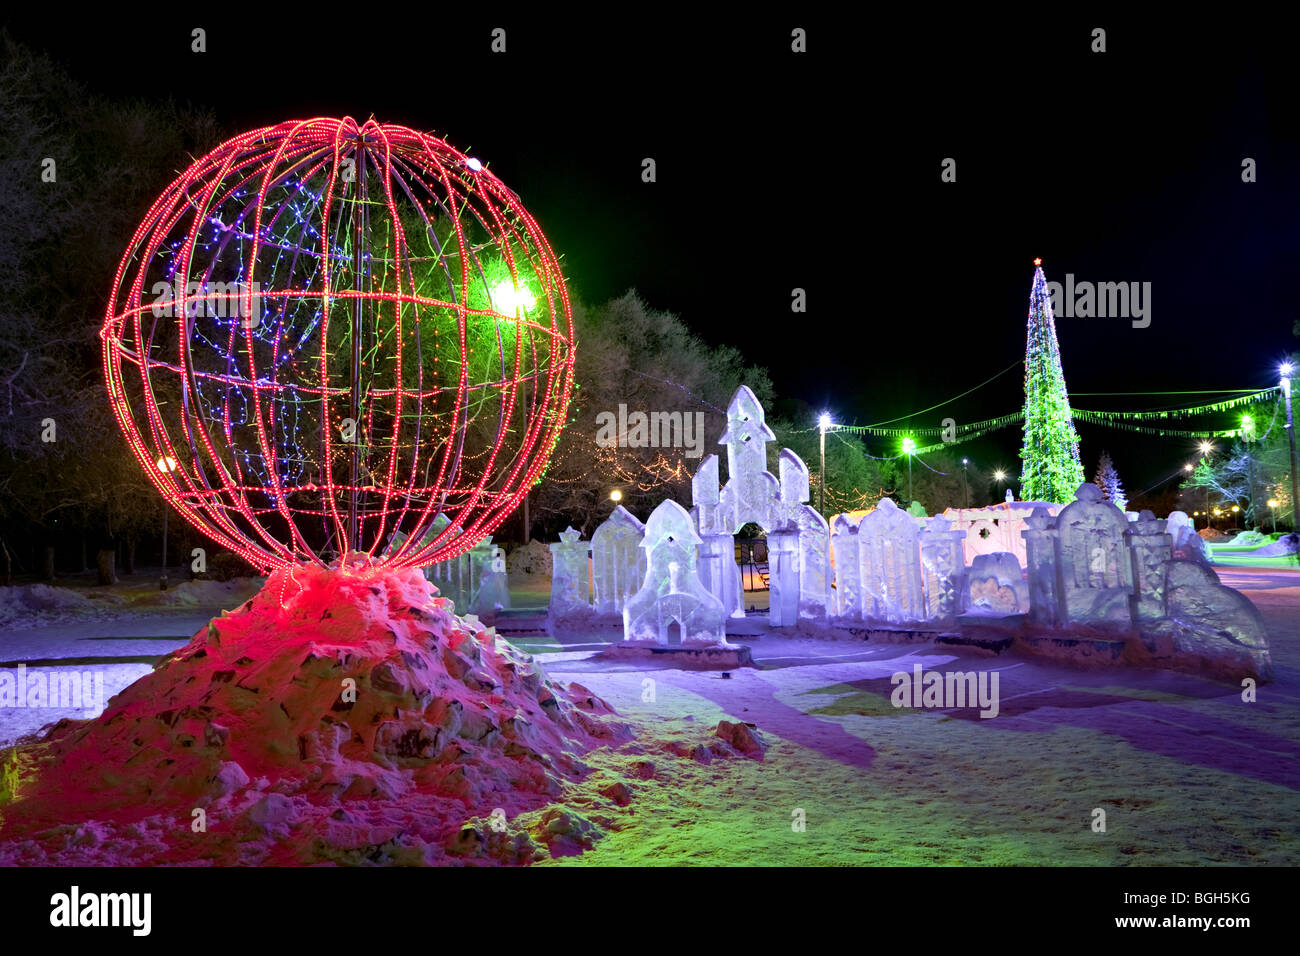 Christmas ice city with illuminated globe Stock Photo